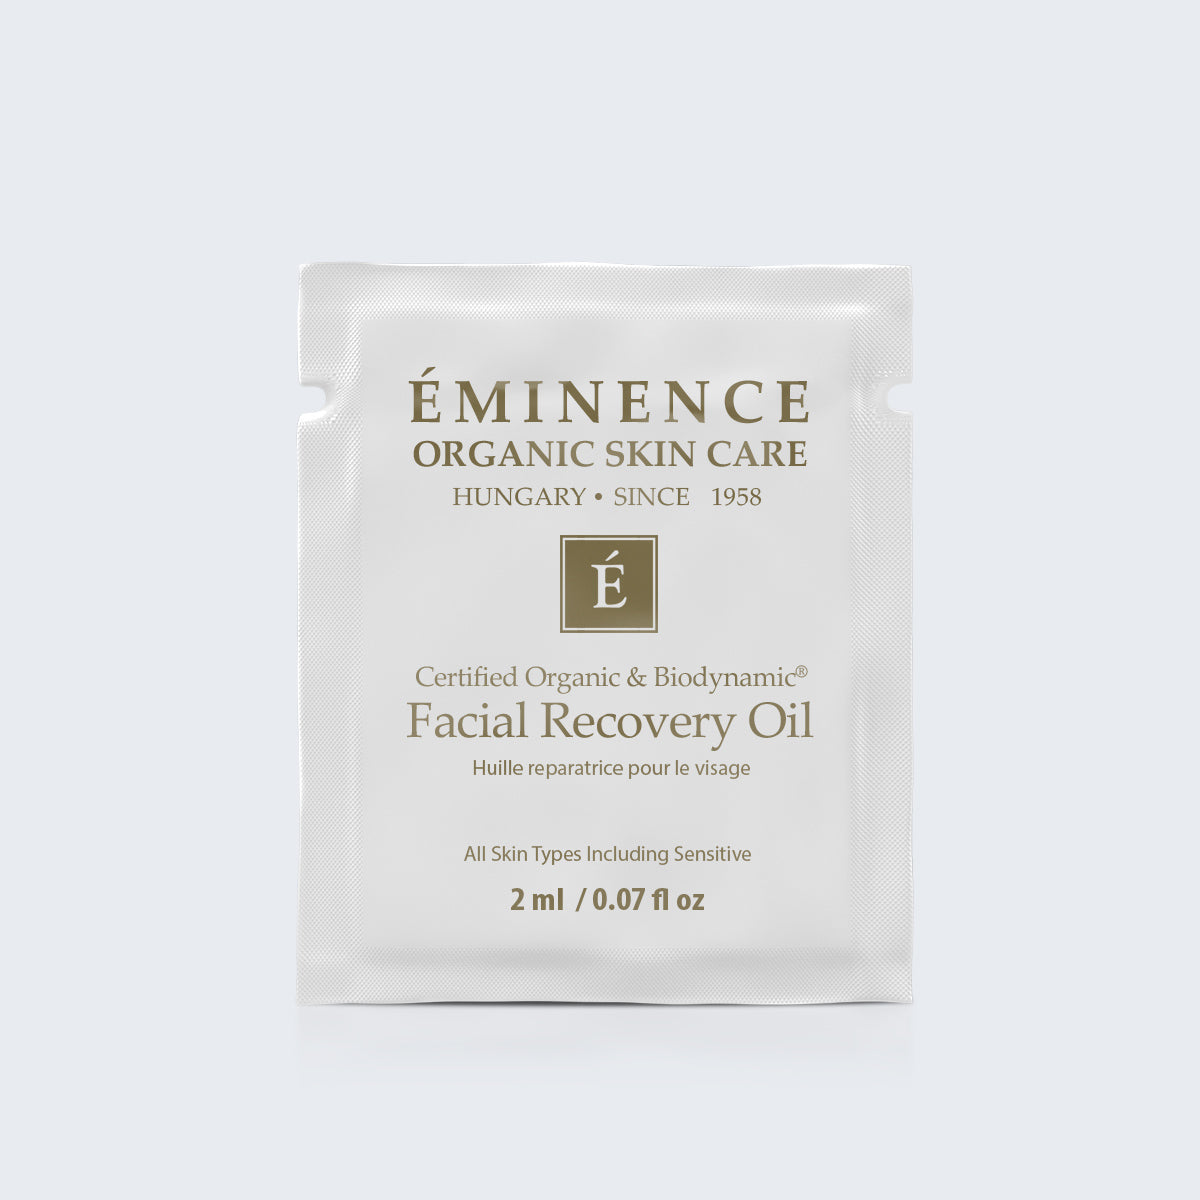 Eminence Organics Facial Recovery Oil Card Sample